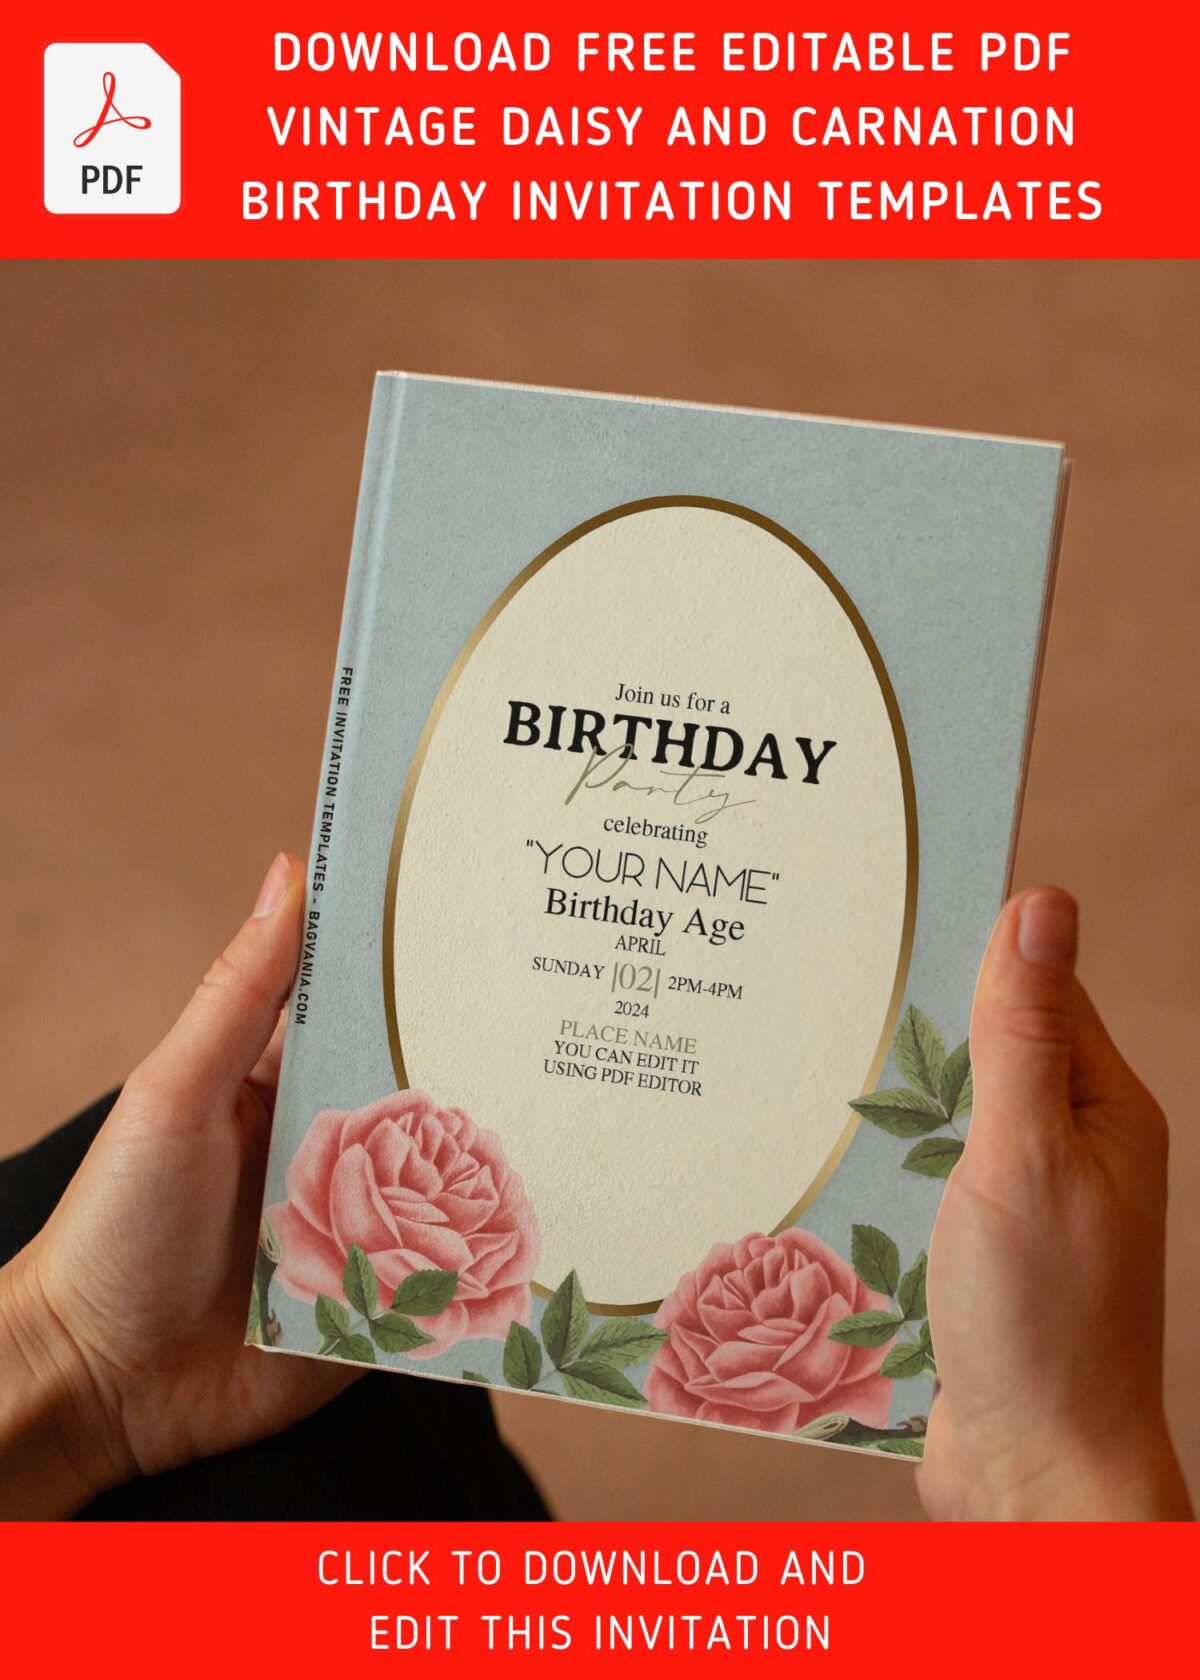 (Free Editable PDF) Breathtaking Vintage Daisy And Carnation Invitation Templates with editable text